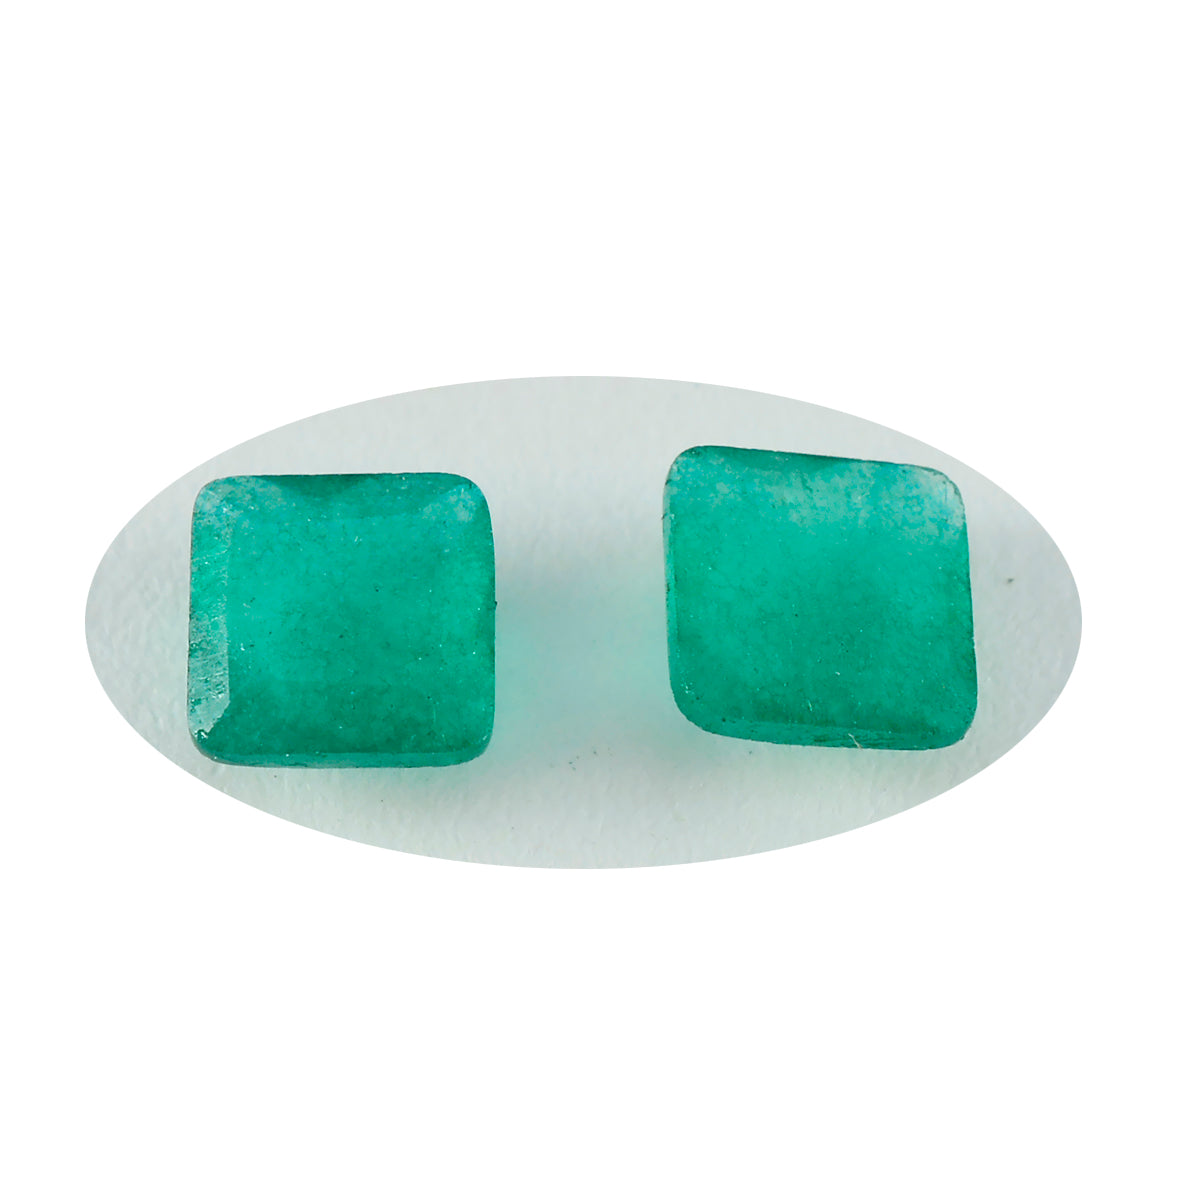 Riyogems 1PC Real Green Jasper Faceted 10x10 mm Square Shape amazing Quality Loose Gems